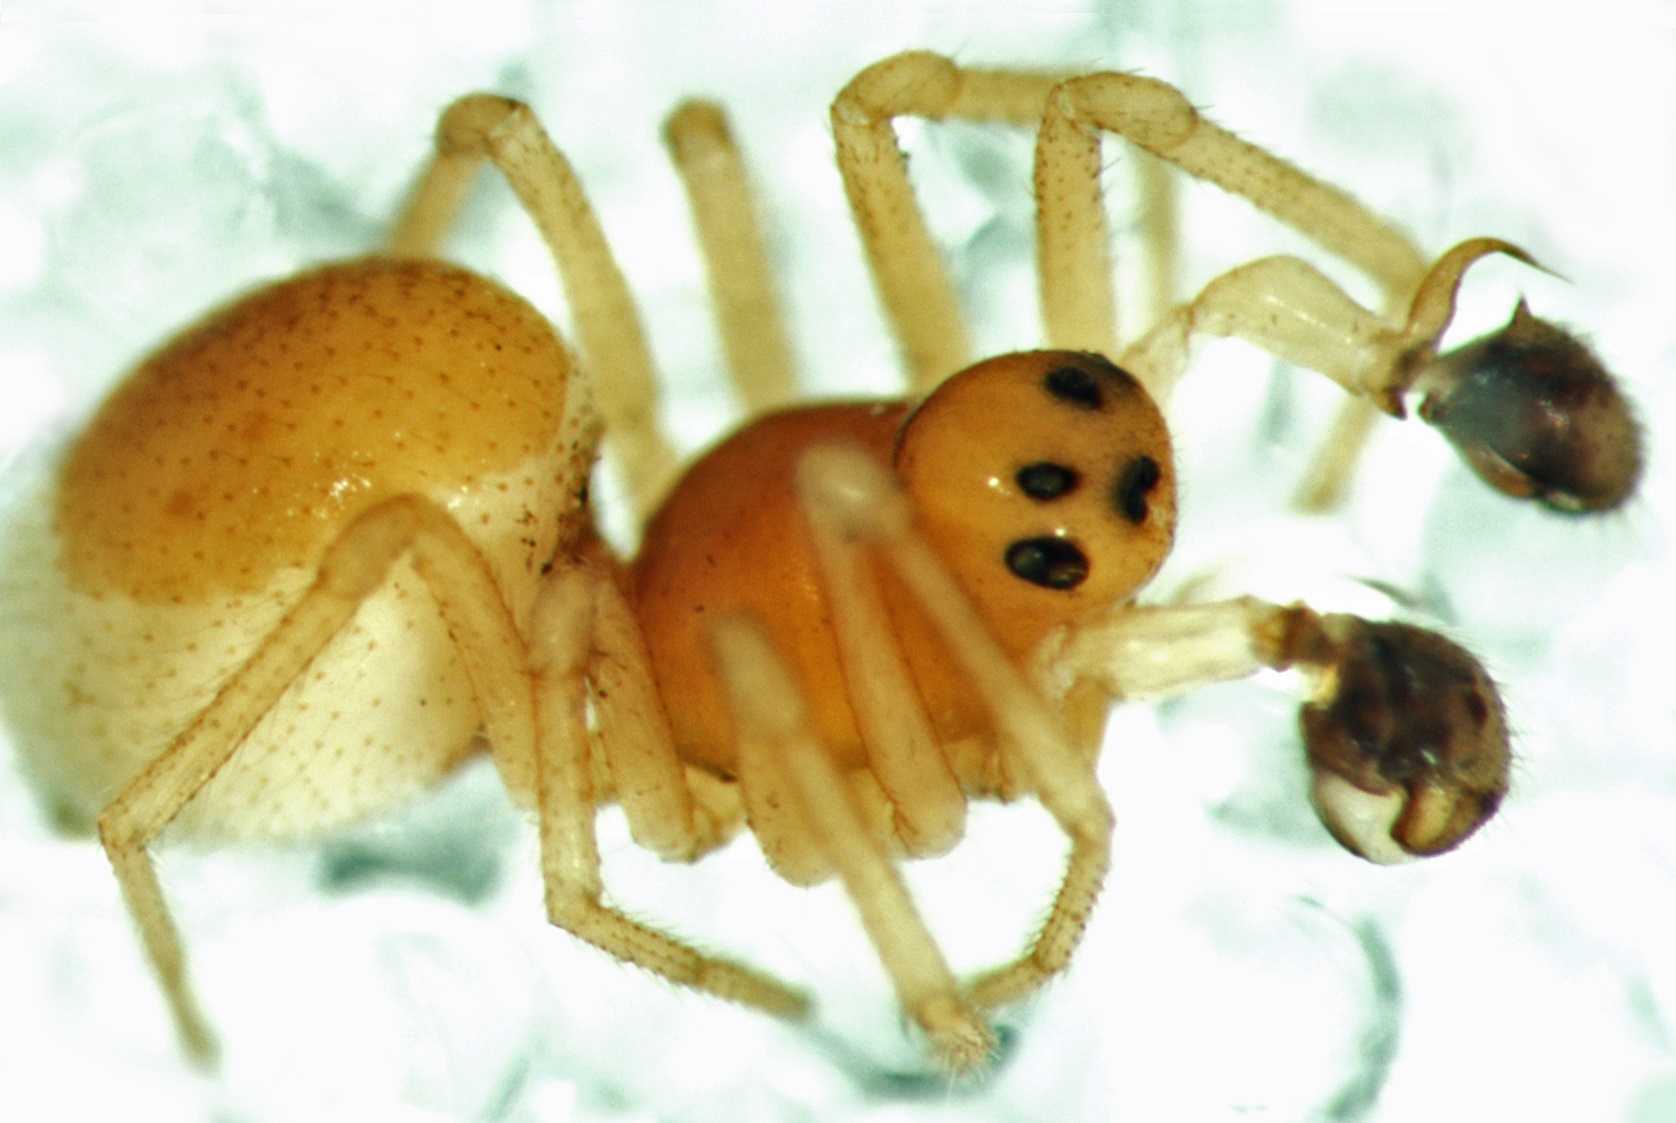 Full body of a male Dwarf Spider, Ceraticelus artemisiae.